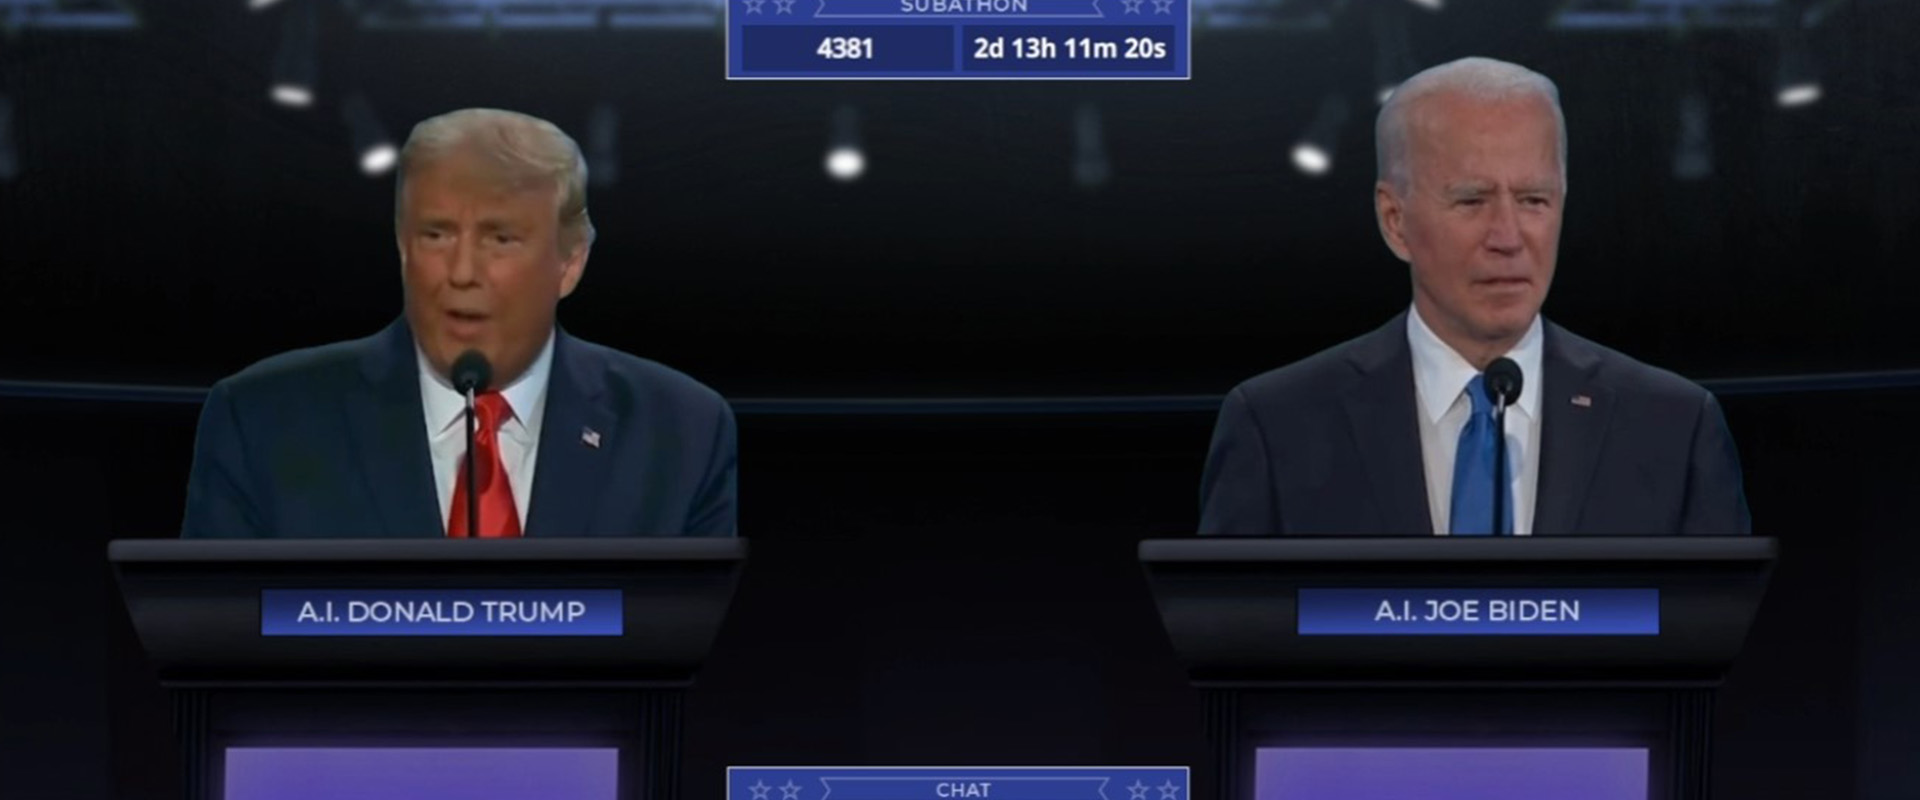 donald_trump_joe_biden_ai_parody_presidential_debate